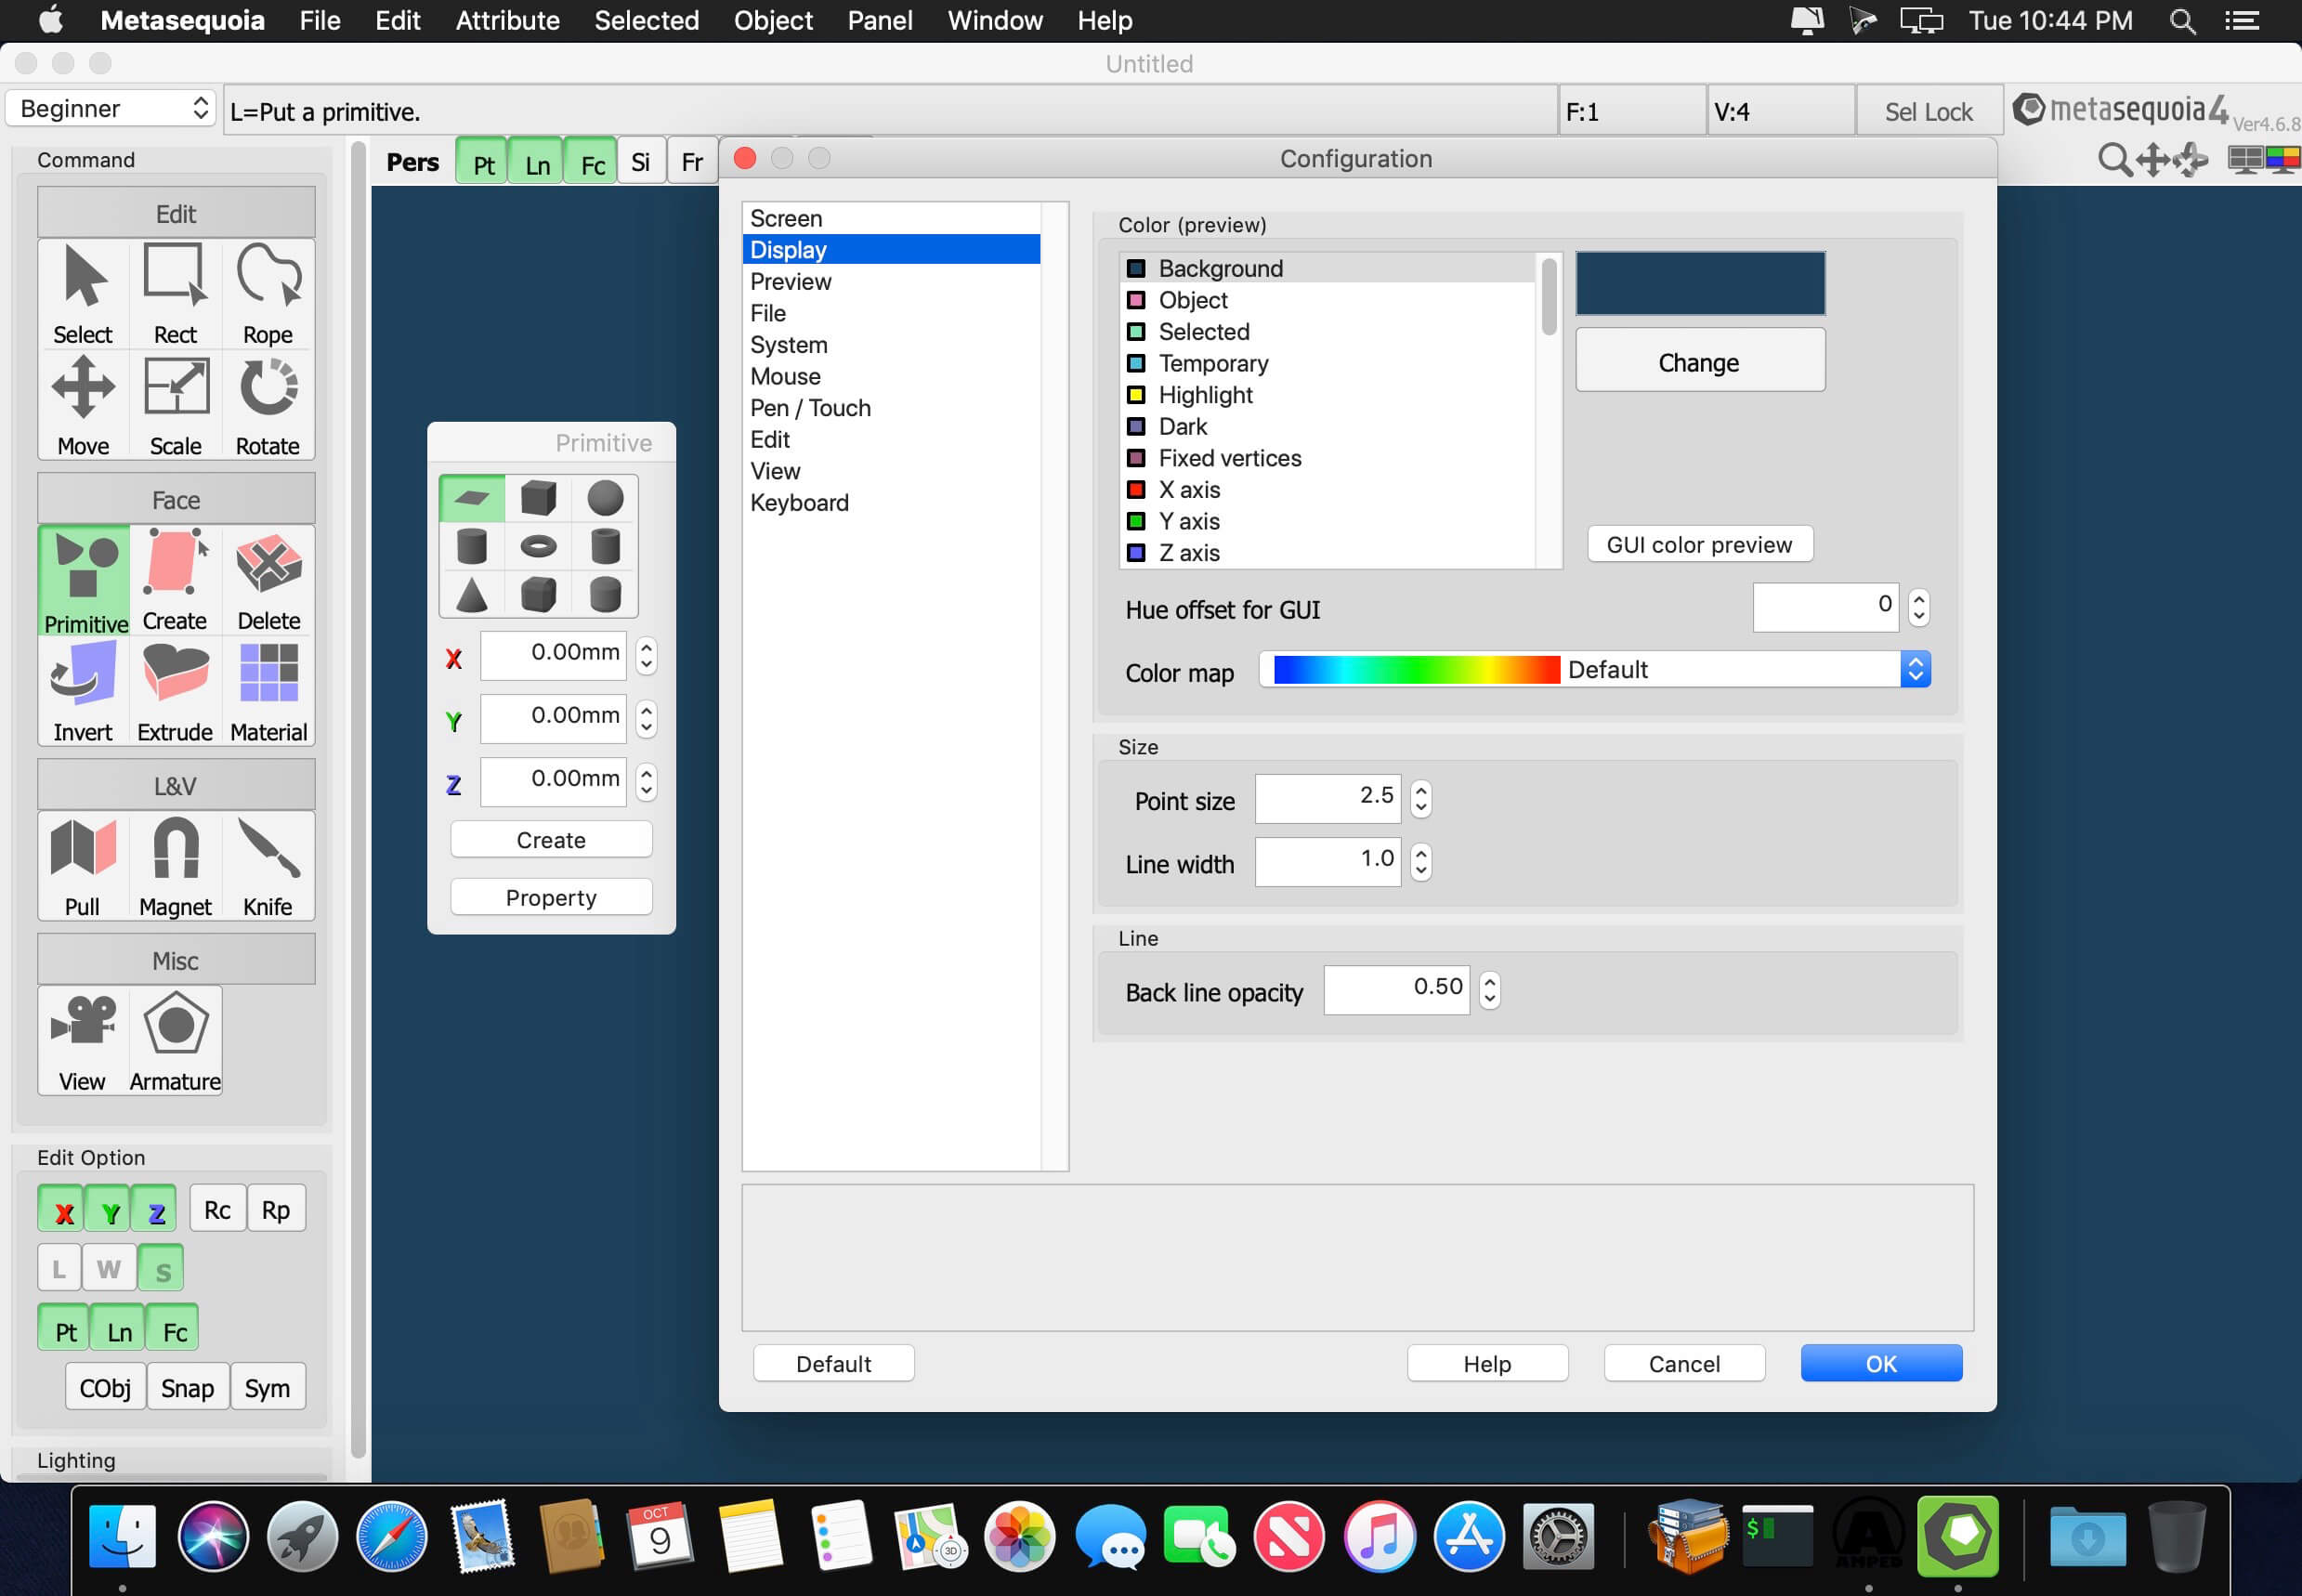 Metasequoia 4.7 for Mac Dmg Free Download